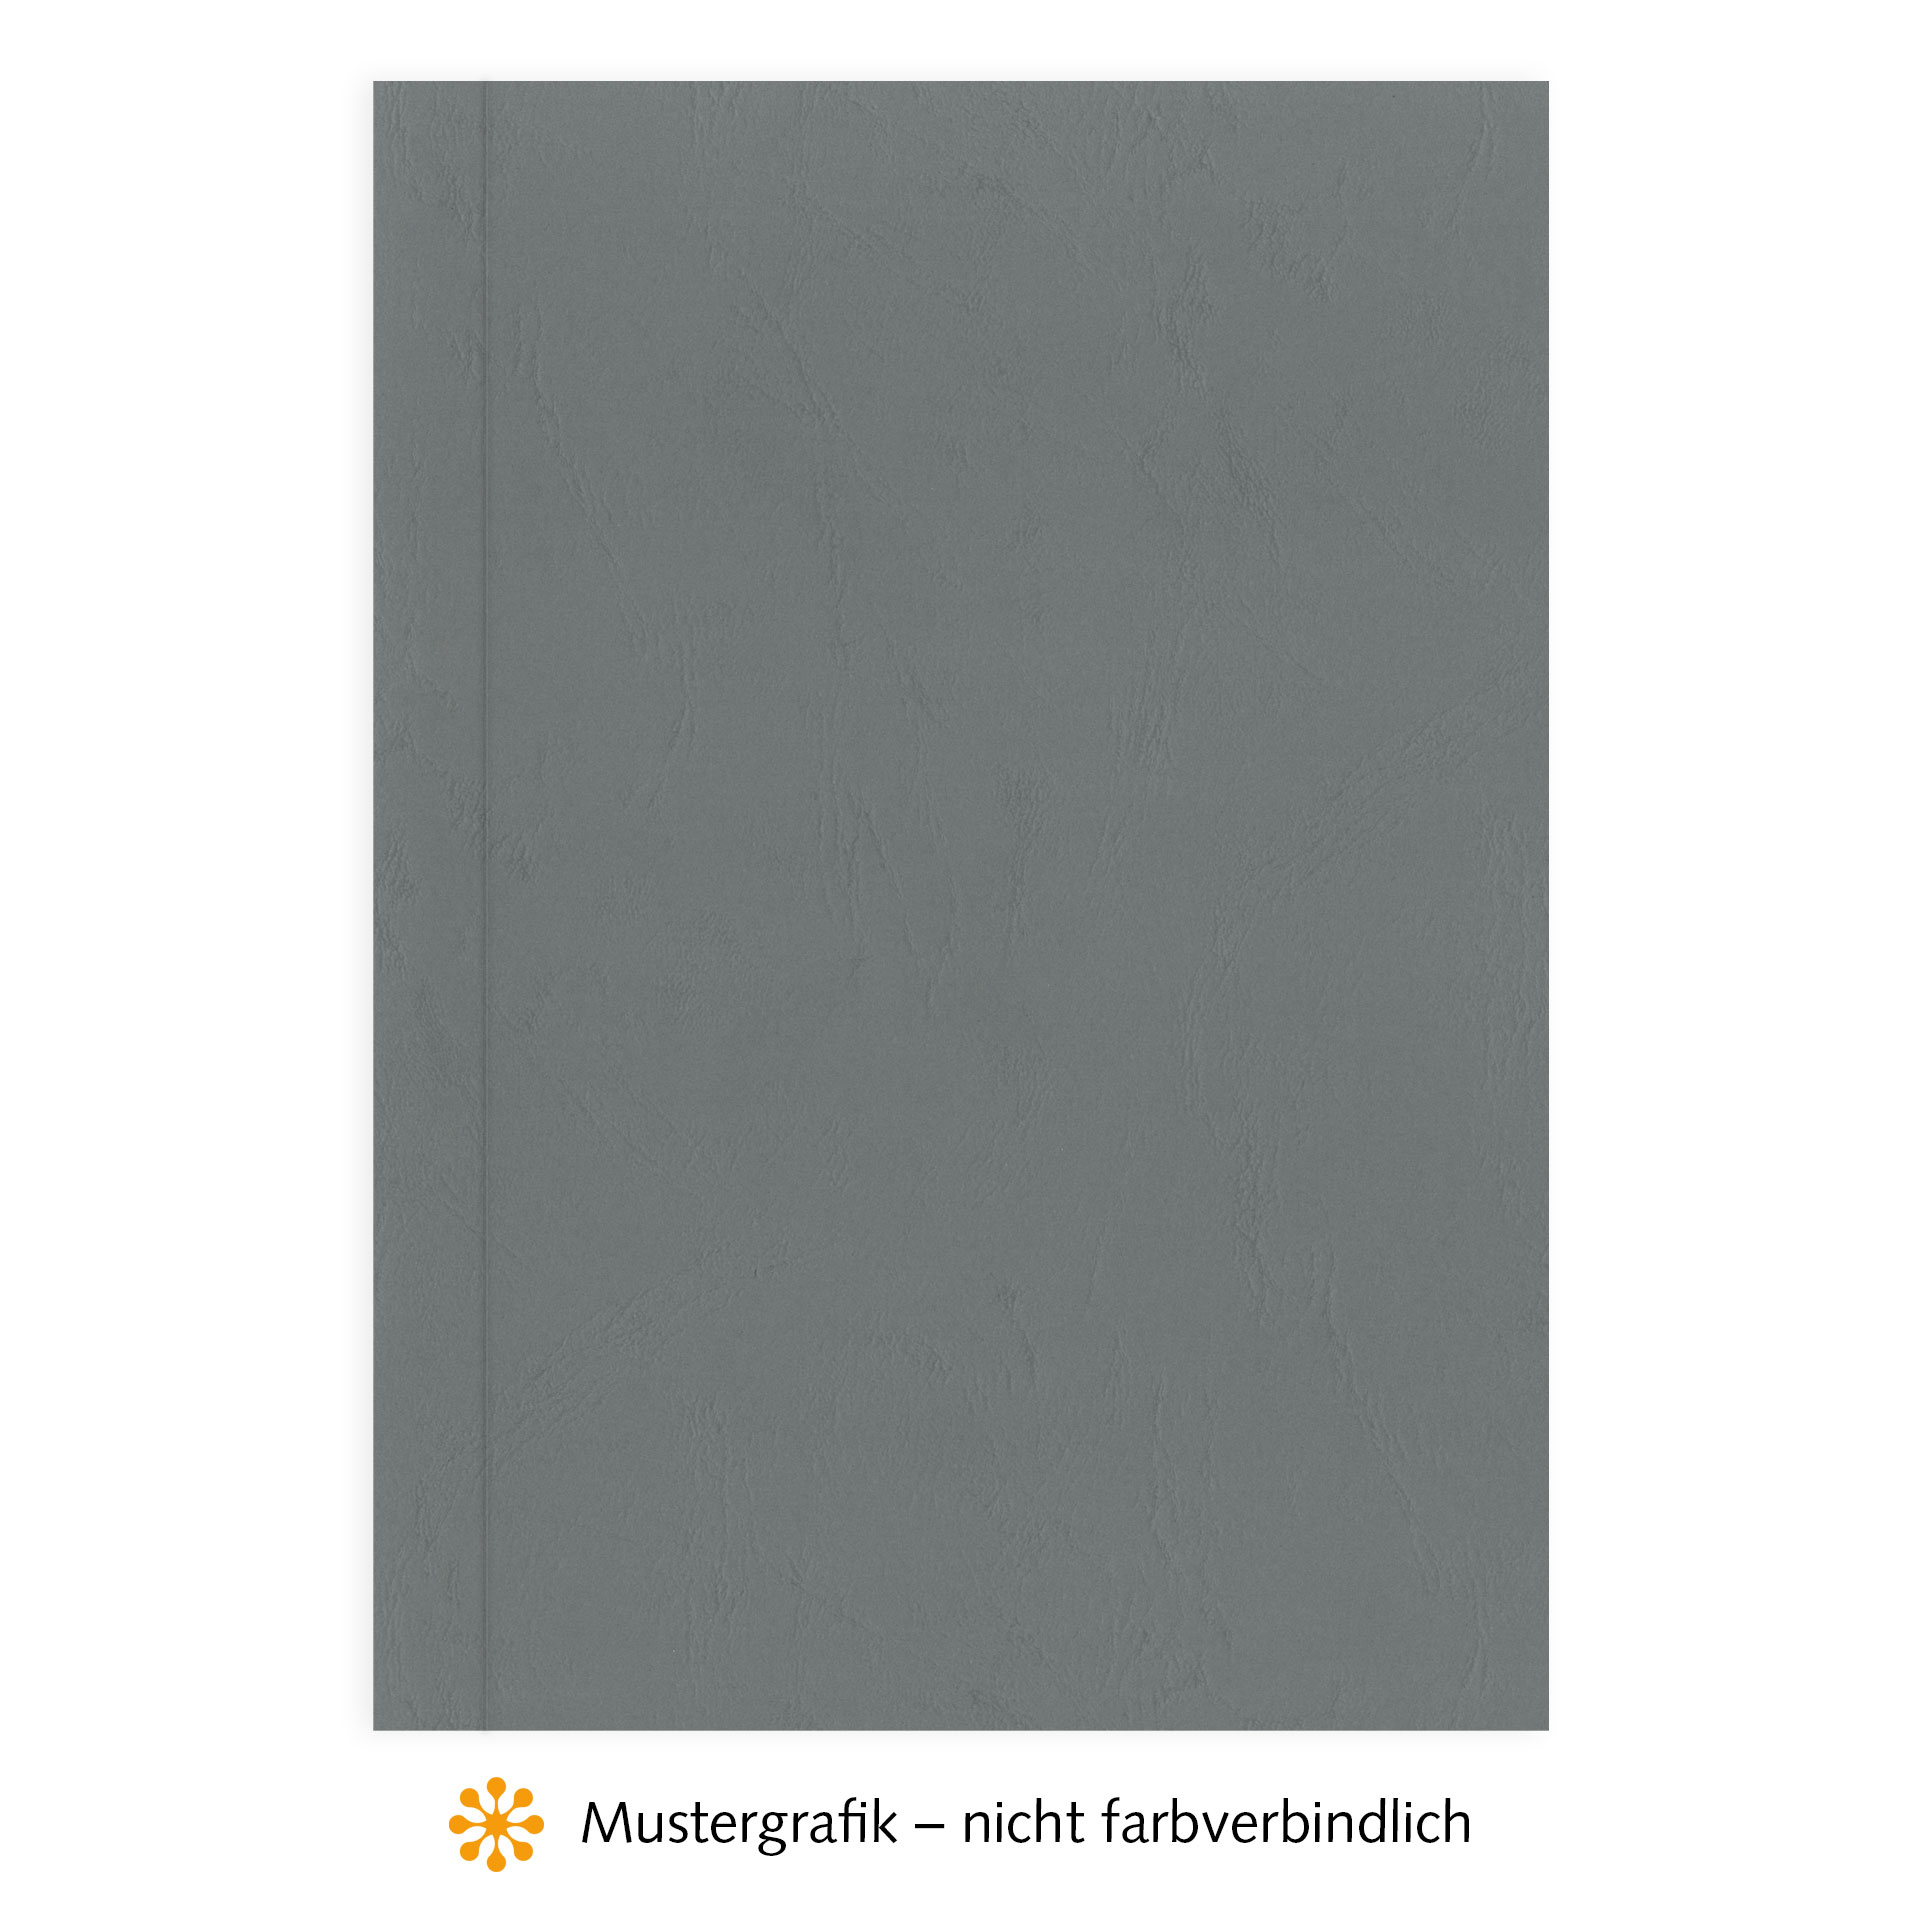 Ösenmappen DUO Cover, mit BEIDSEITIG Karton, Leder, Dunkelgrau / Anthrazit, 5 mm, 41 bis 50 Blatt